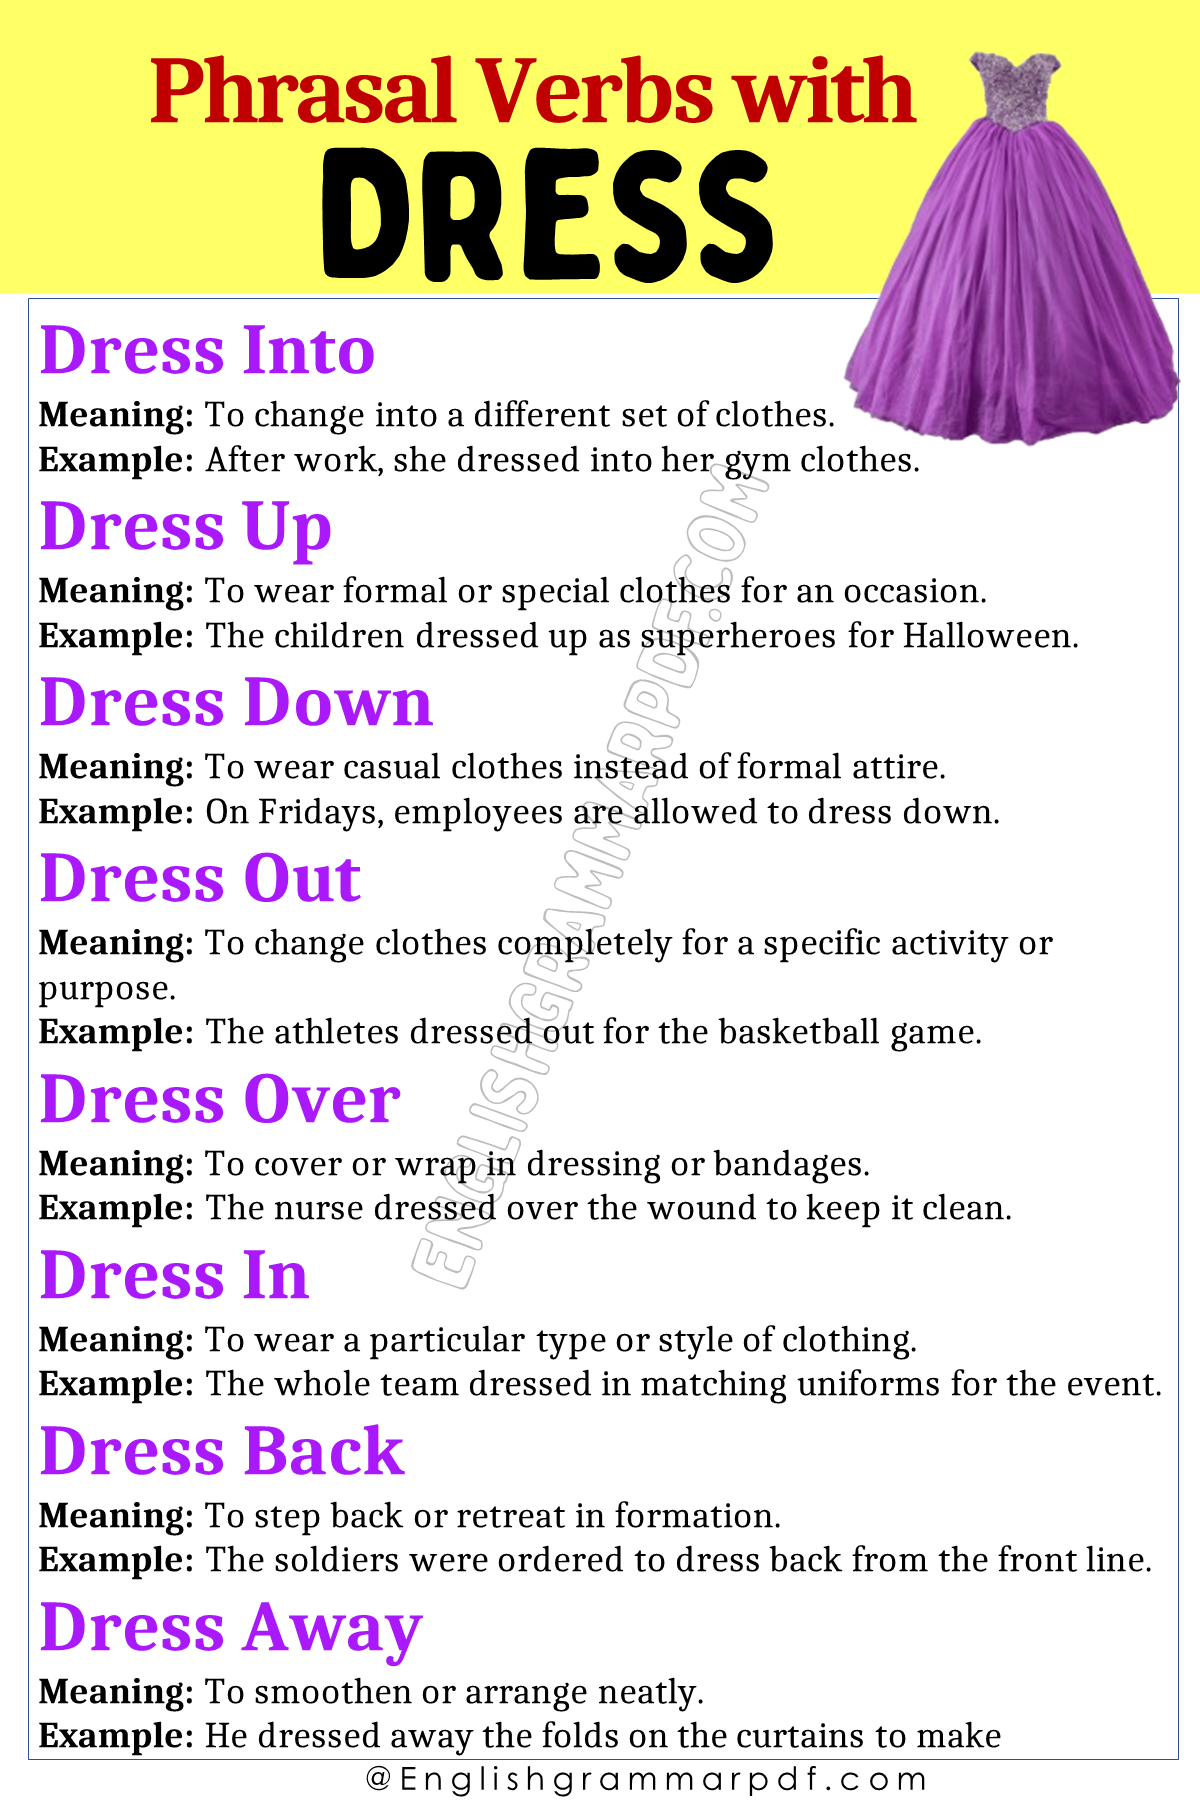 Phrasal Verbs with Dress 2